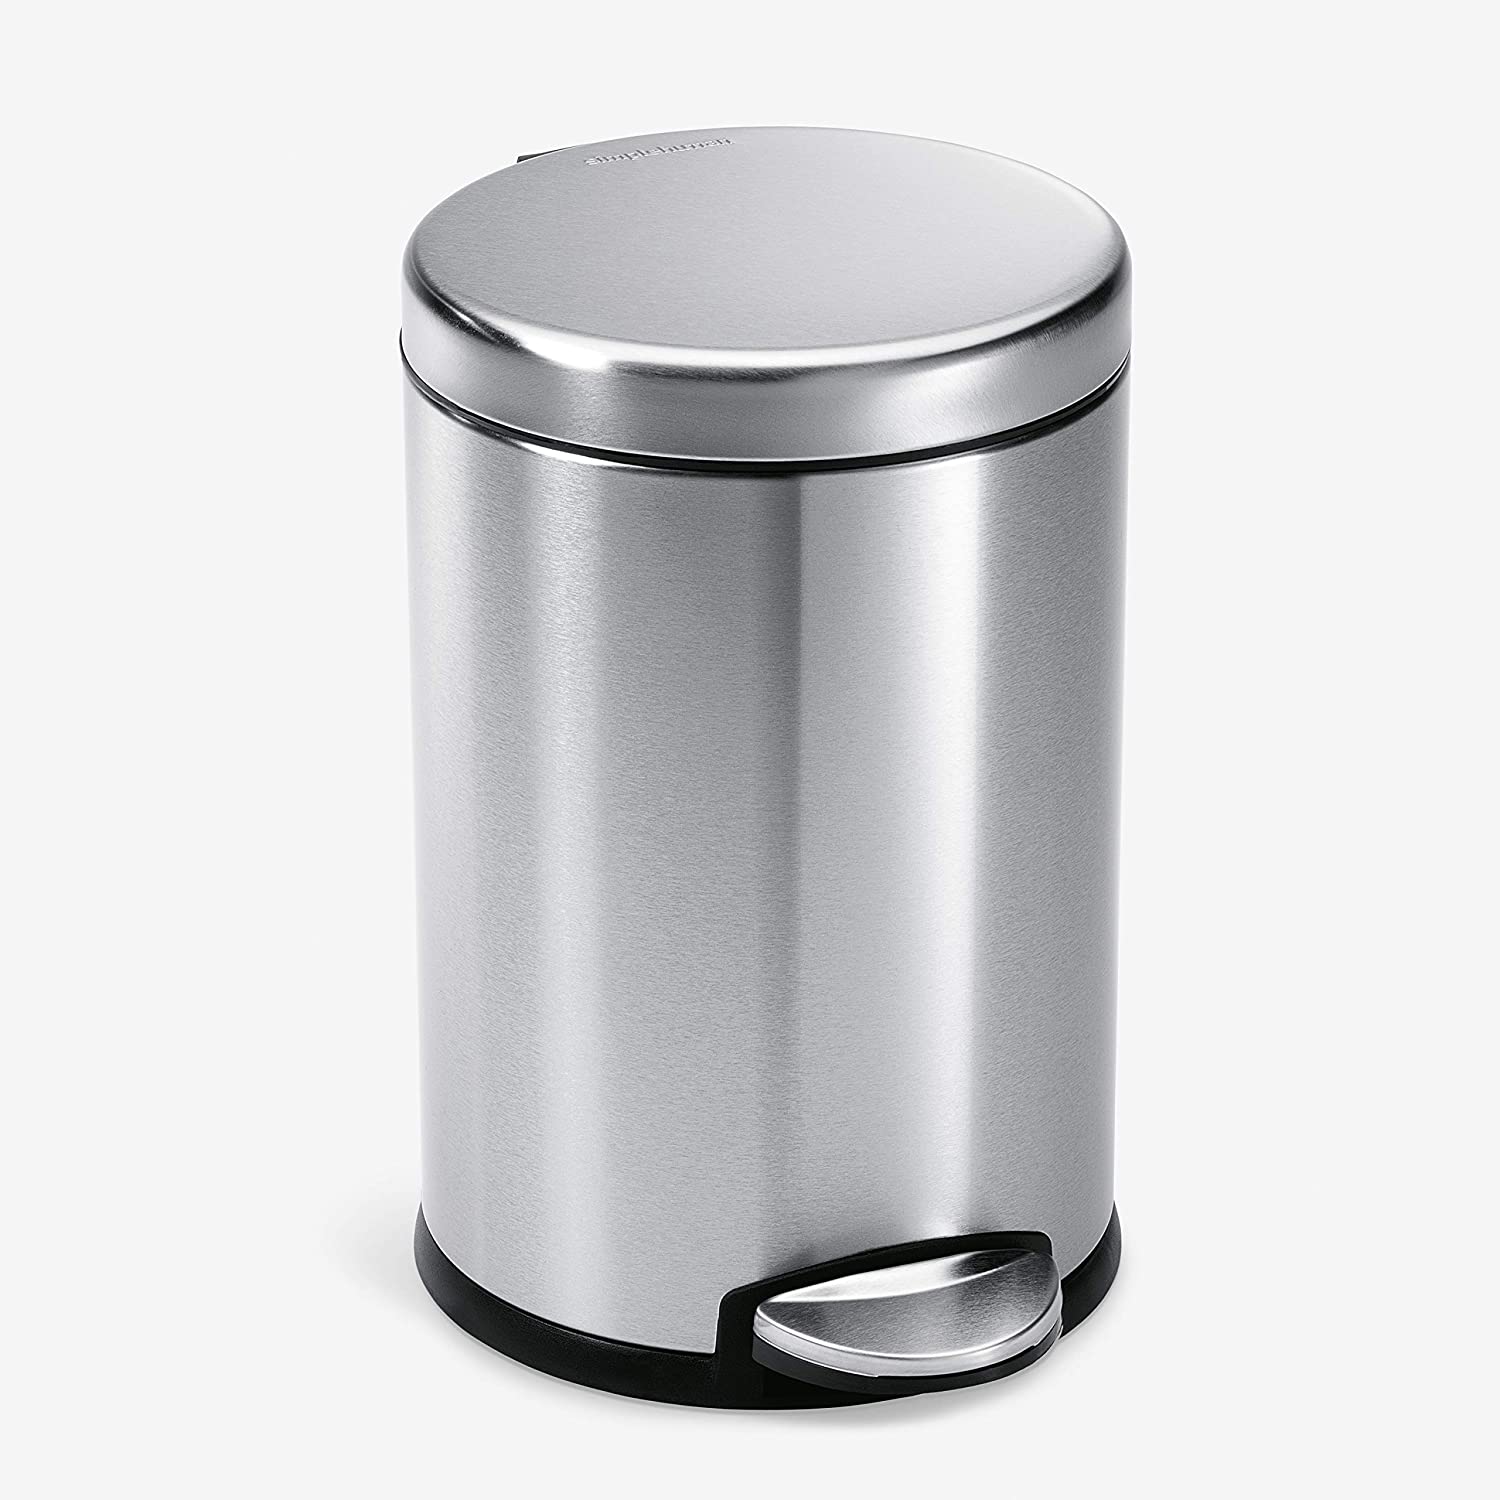  3. Simplehuman Gallon Round Mini Trash Cans 